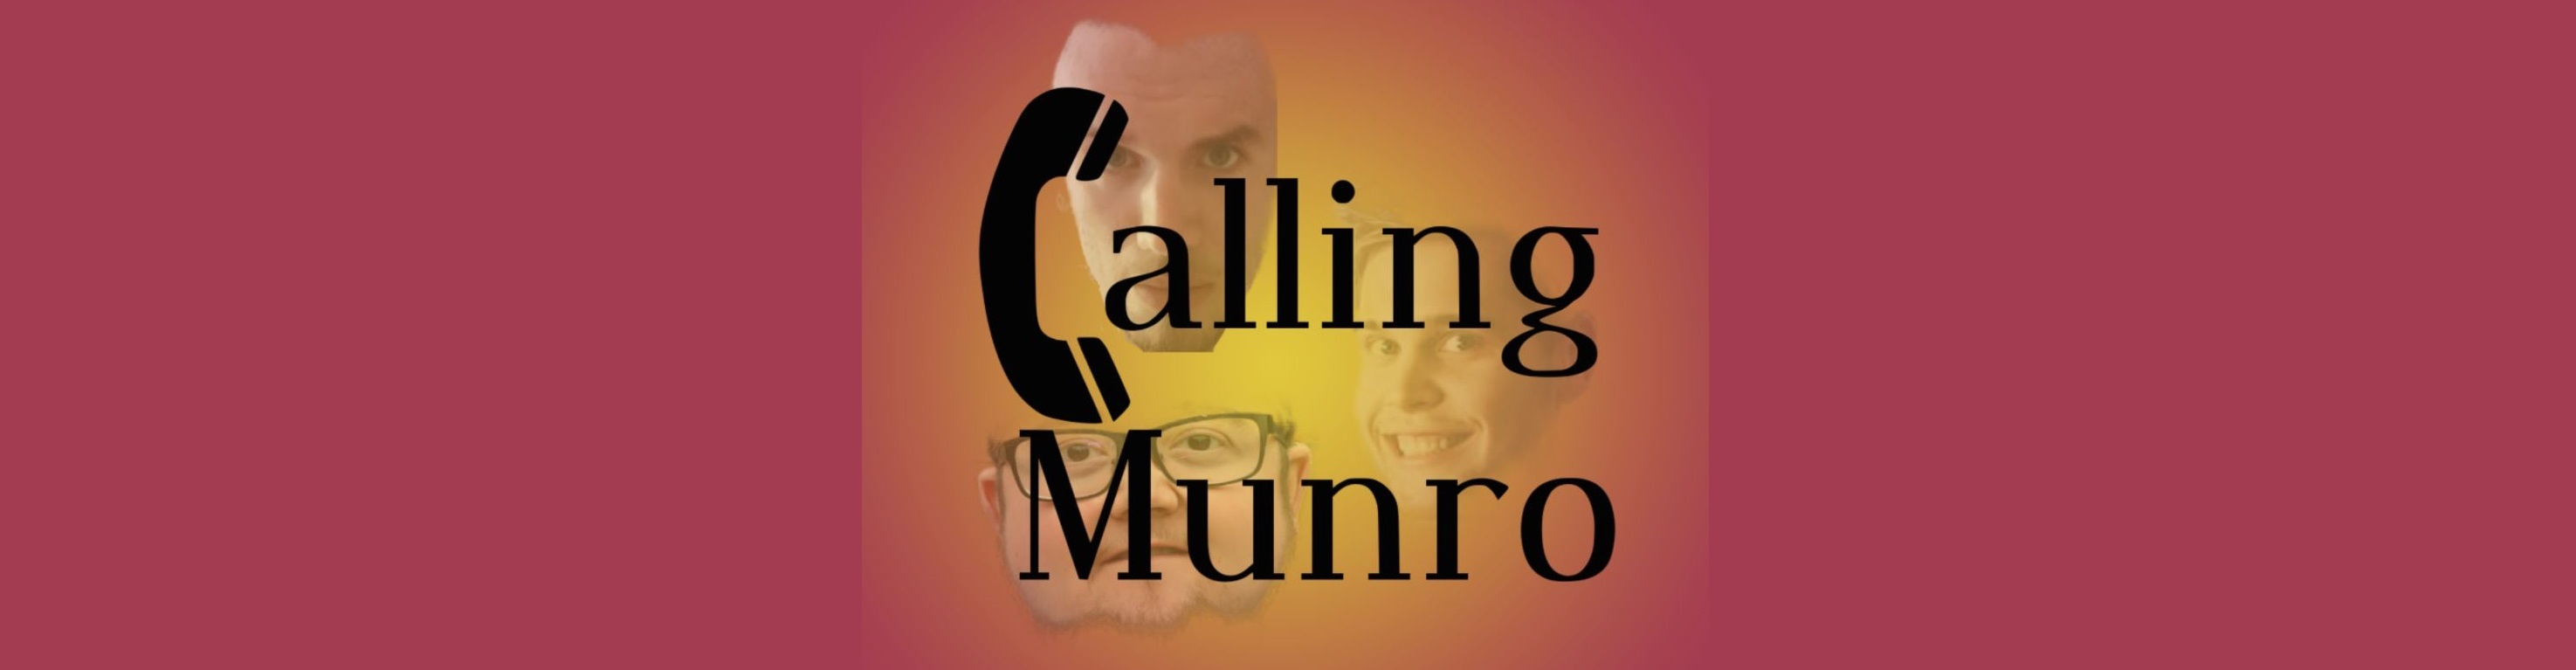 Calling Munro